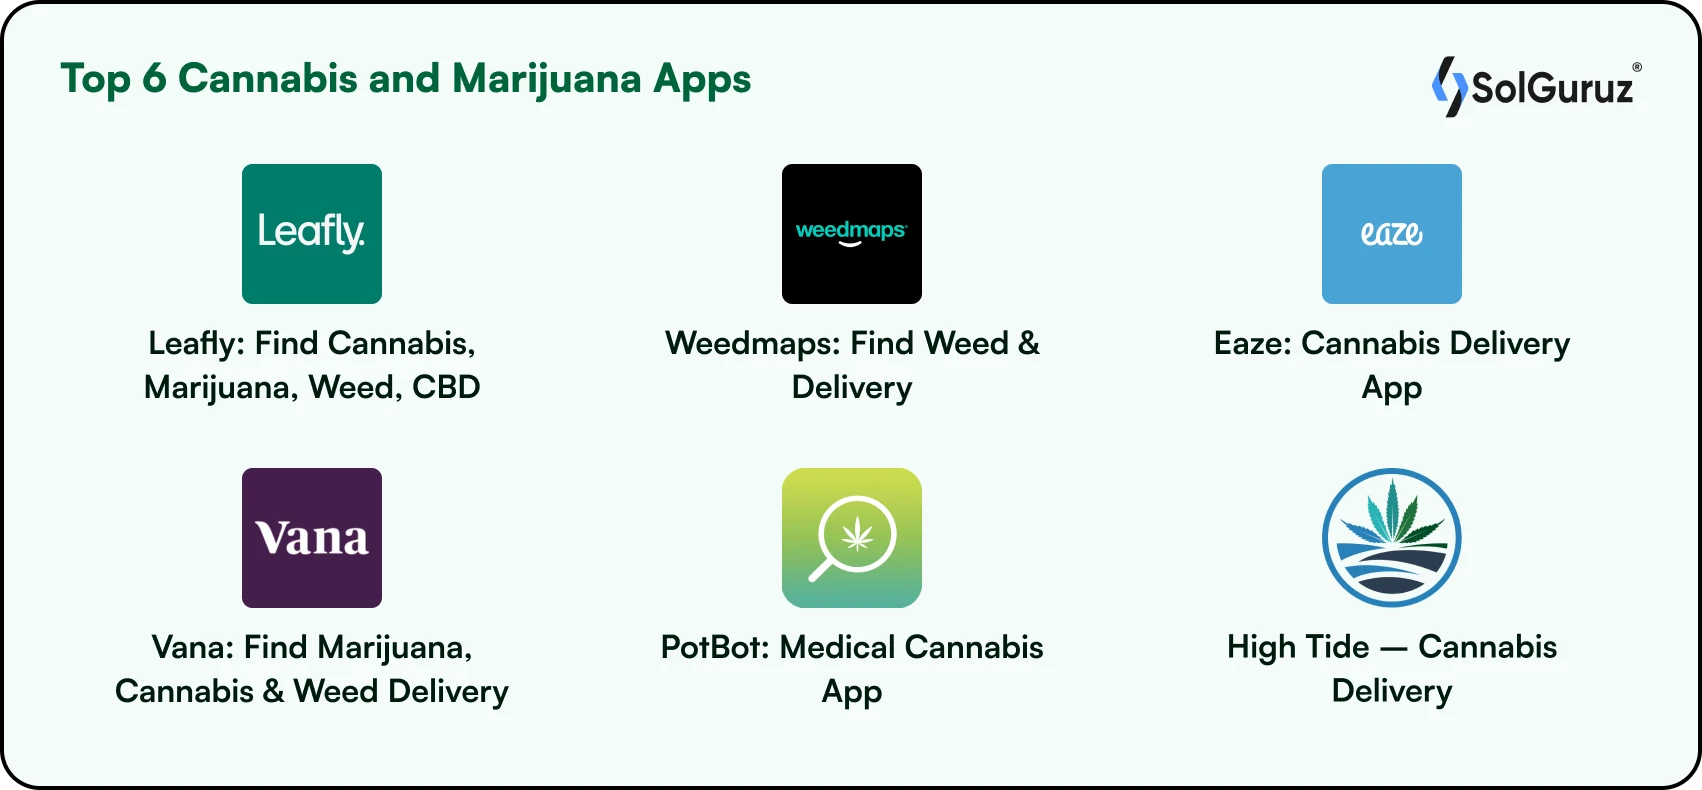 Top 6 Cannabis and Marijuana Apps